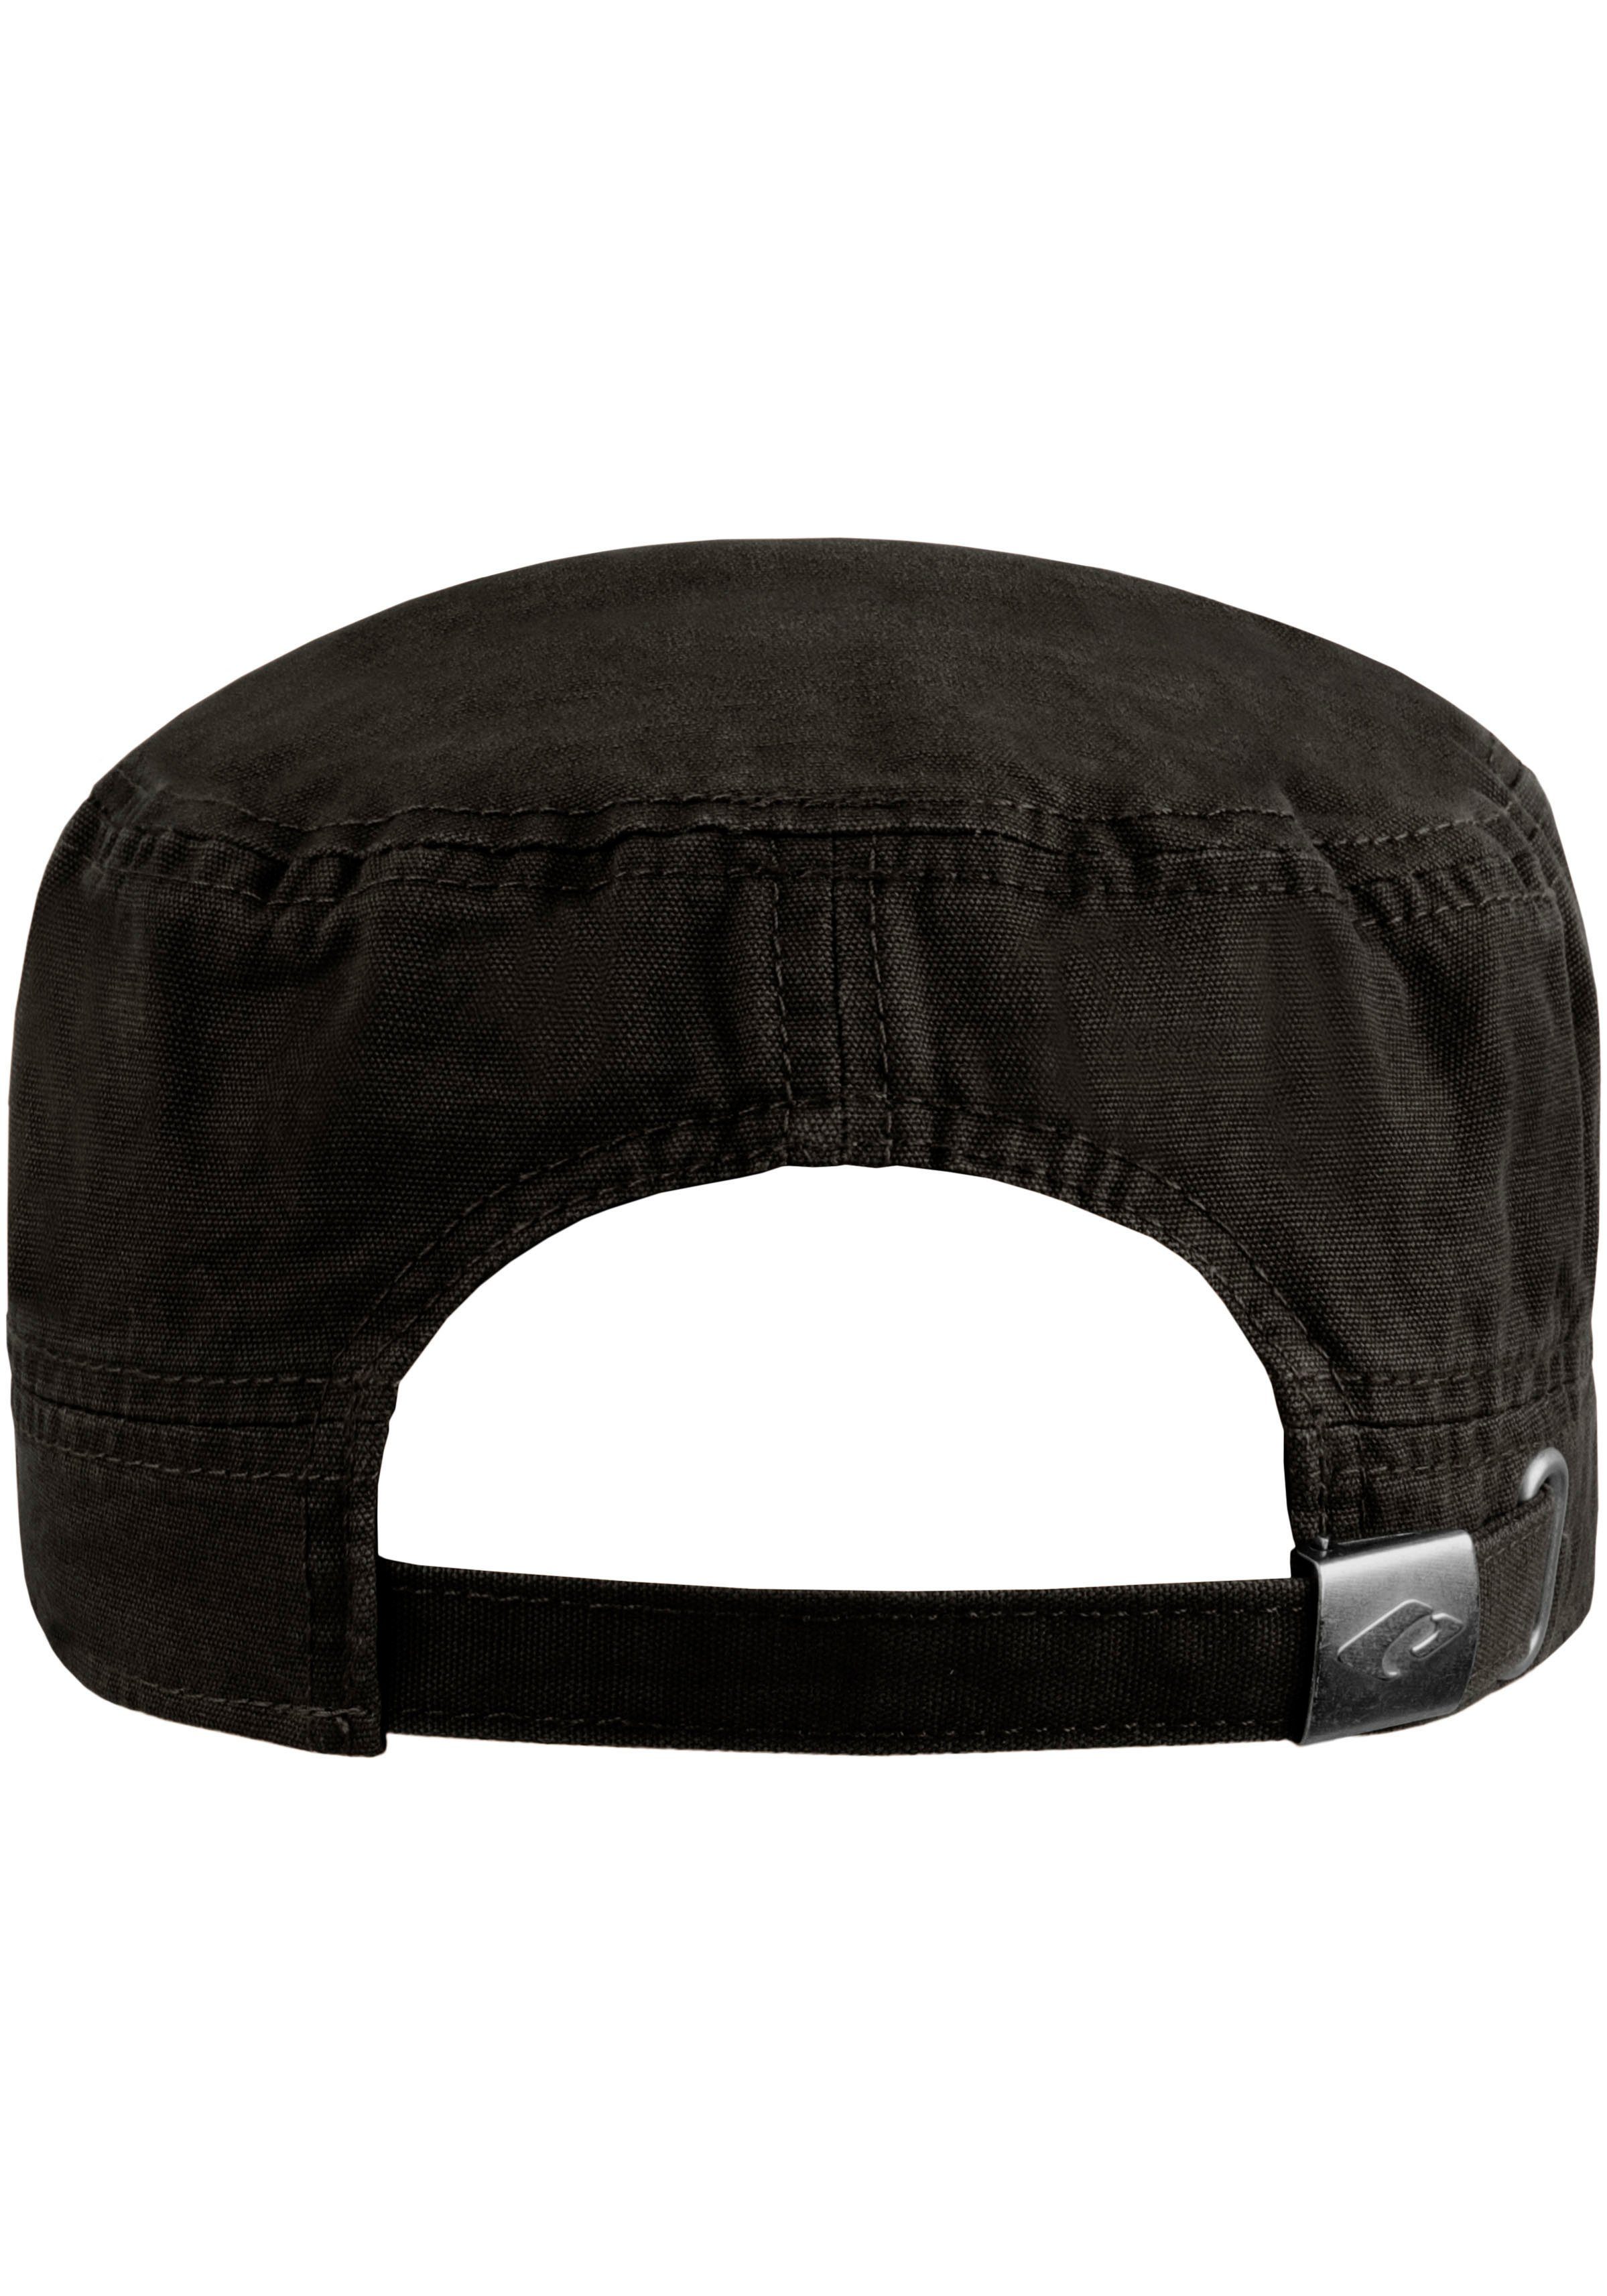 chillouts Army Cap Dublin Hat im schwarz Cap Mililtary-Style